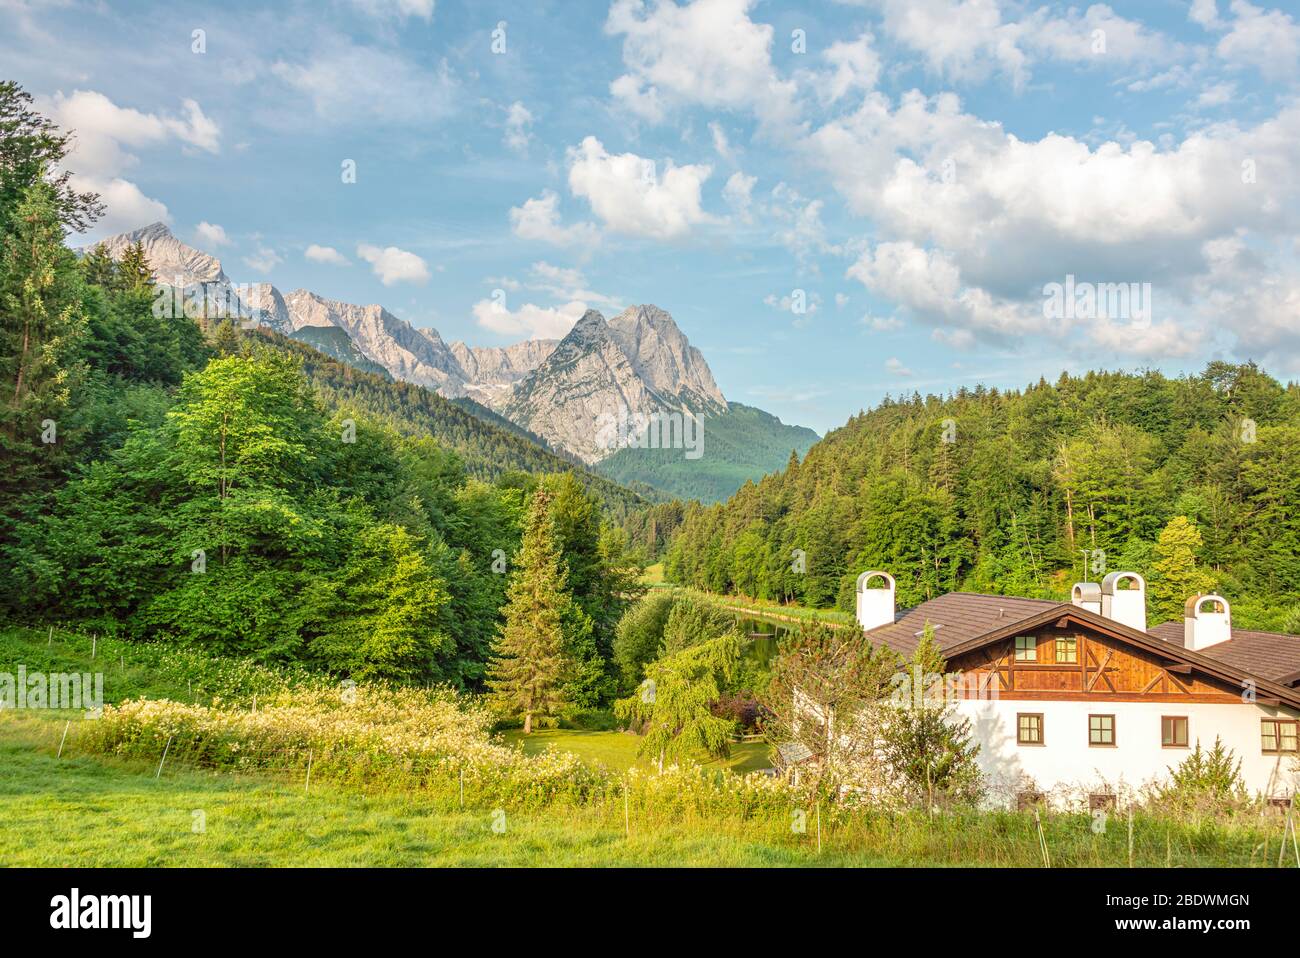 Landscape at the Riessersee with the Wettersteingebirge in the background, Garmisch Partenkirchen, Bavaria, Germany Stock Photo